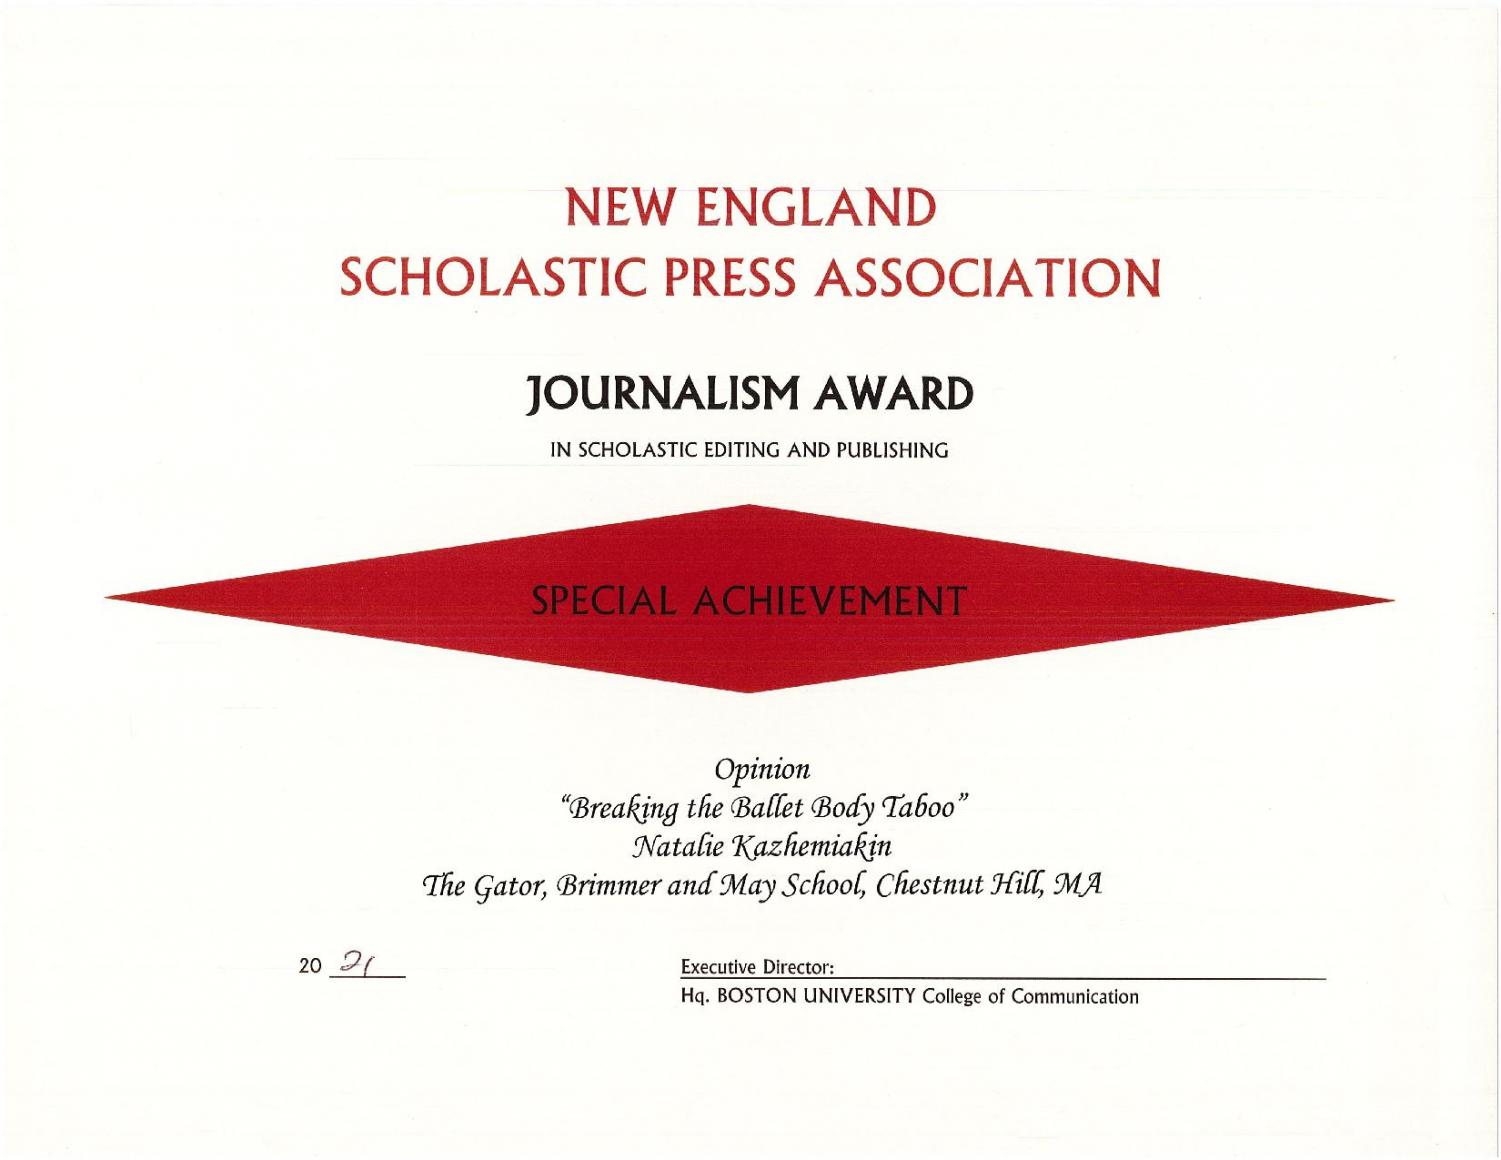 Gator+Wins+All-New+England+Journalism+Award